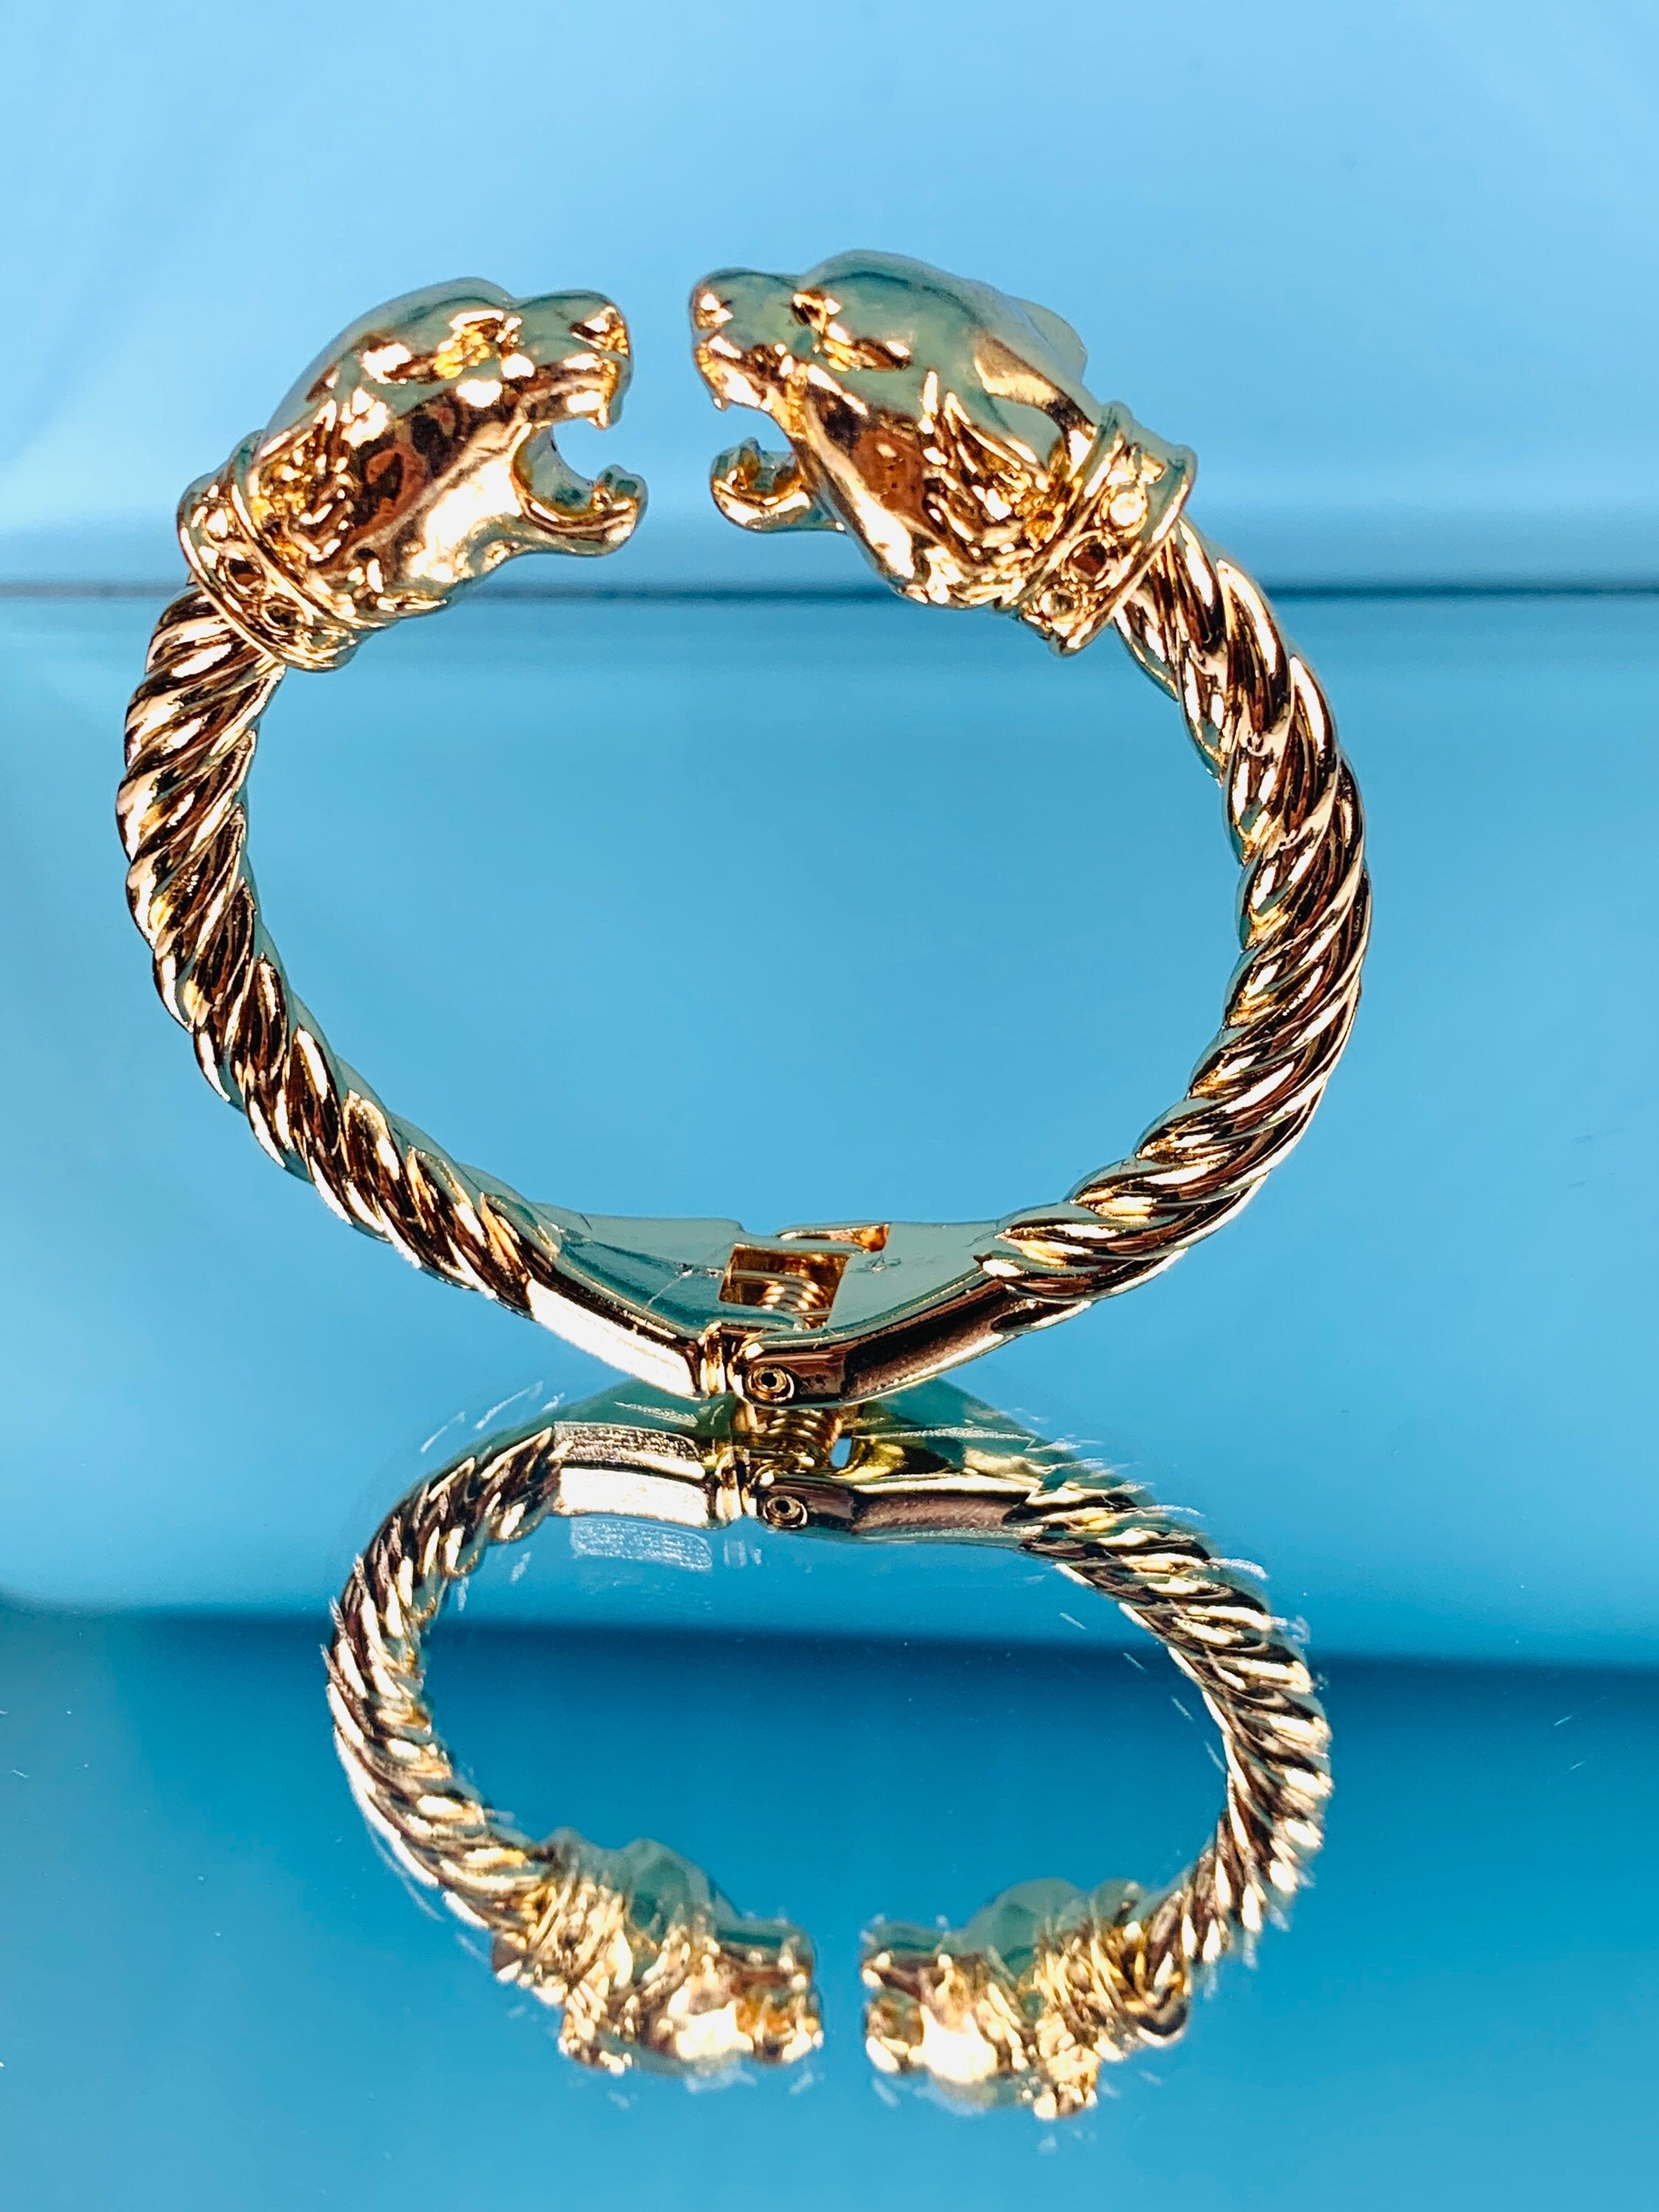 1 Gram Gold Plated Jaguar With Diamond Antique Design Bracelet Kada For Men  - Style A954 at Rs 4470.00 | Artificial kada | ID: 2853201571412